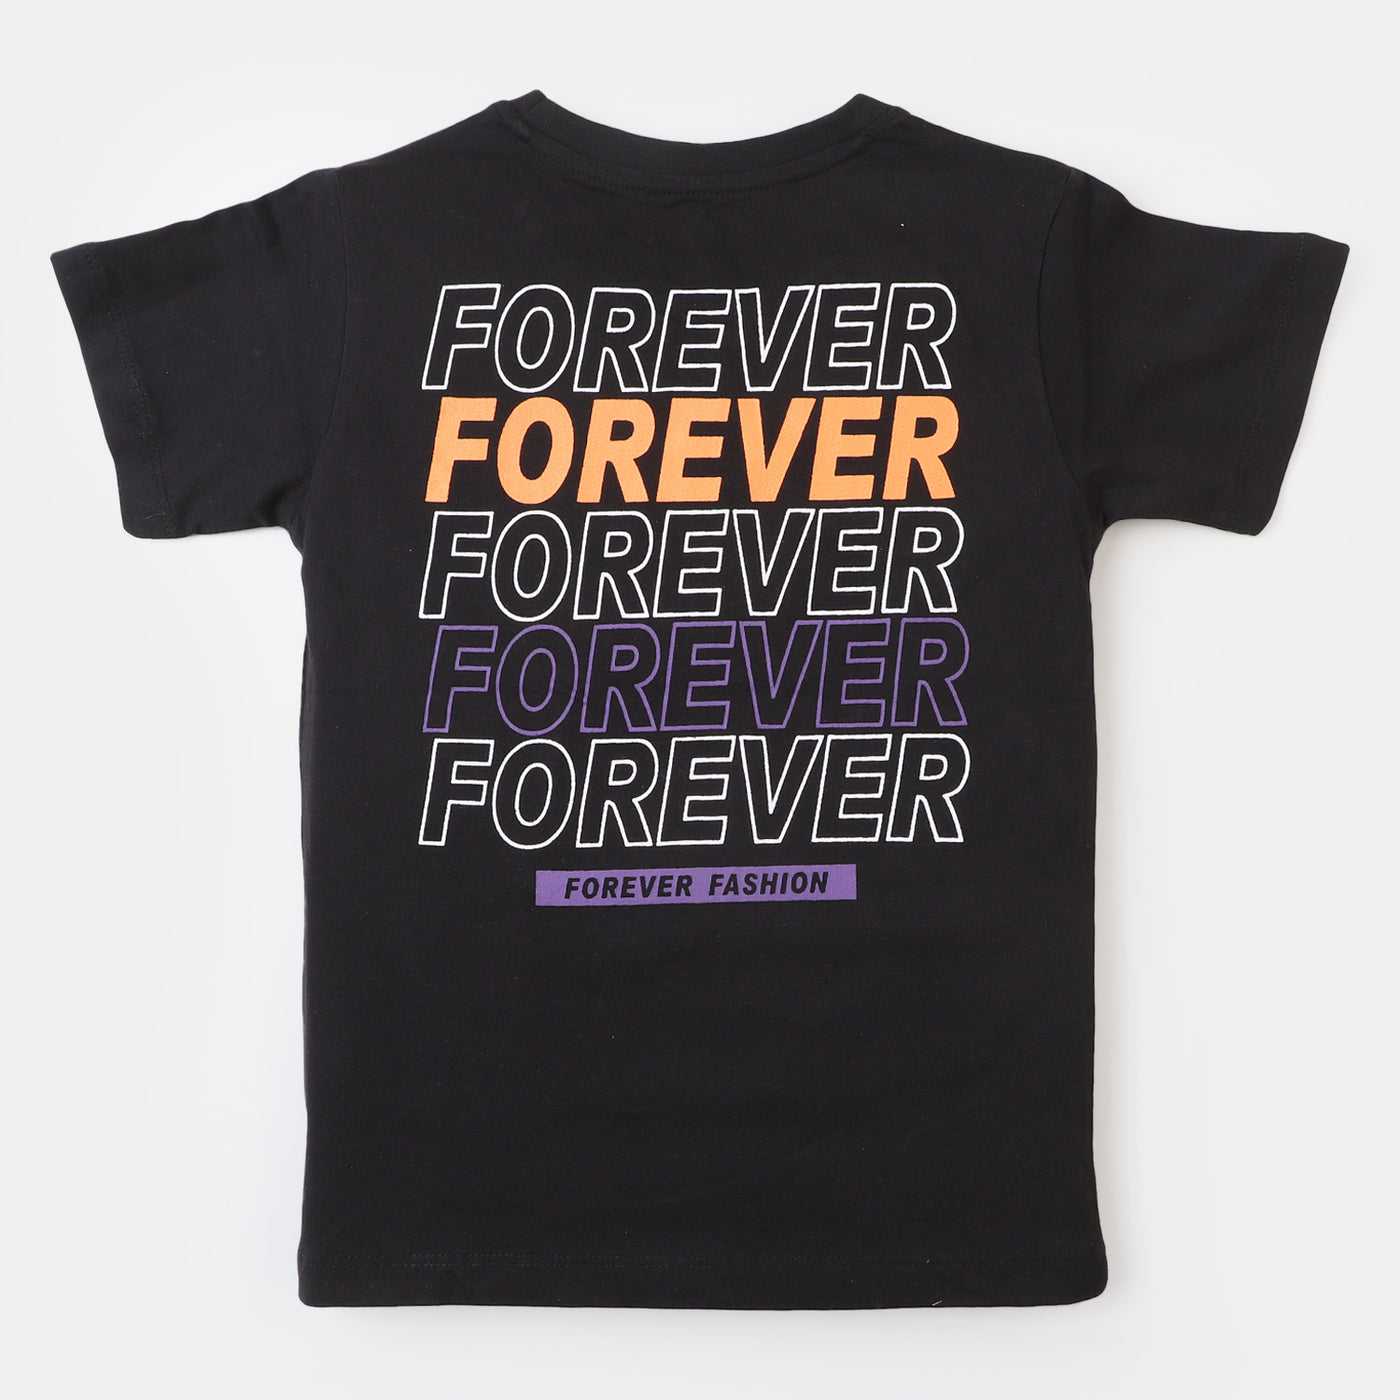 Boys T-Shirt For-Ever - Black